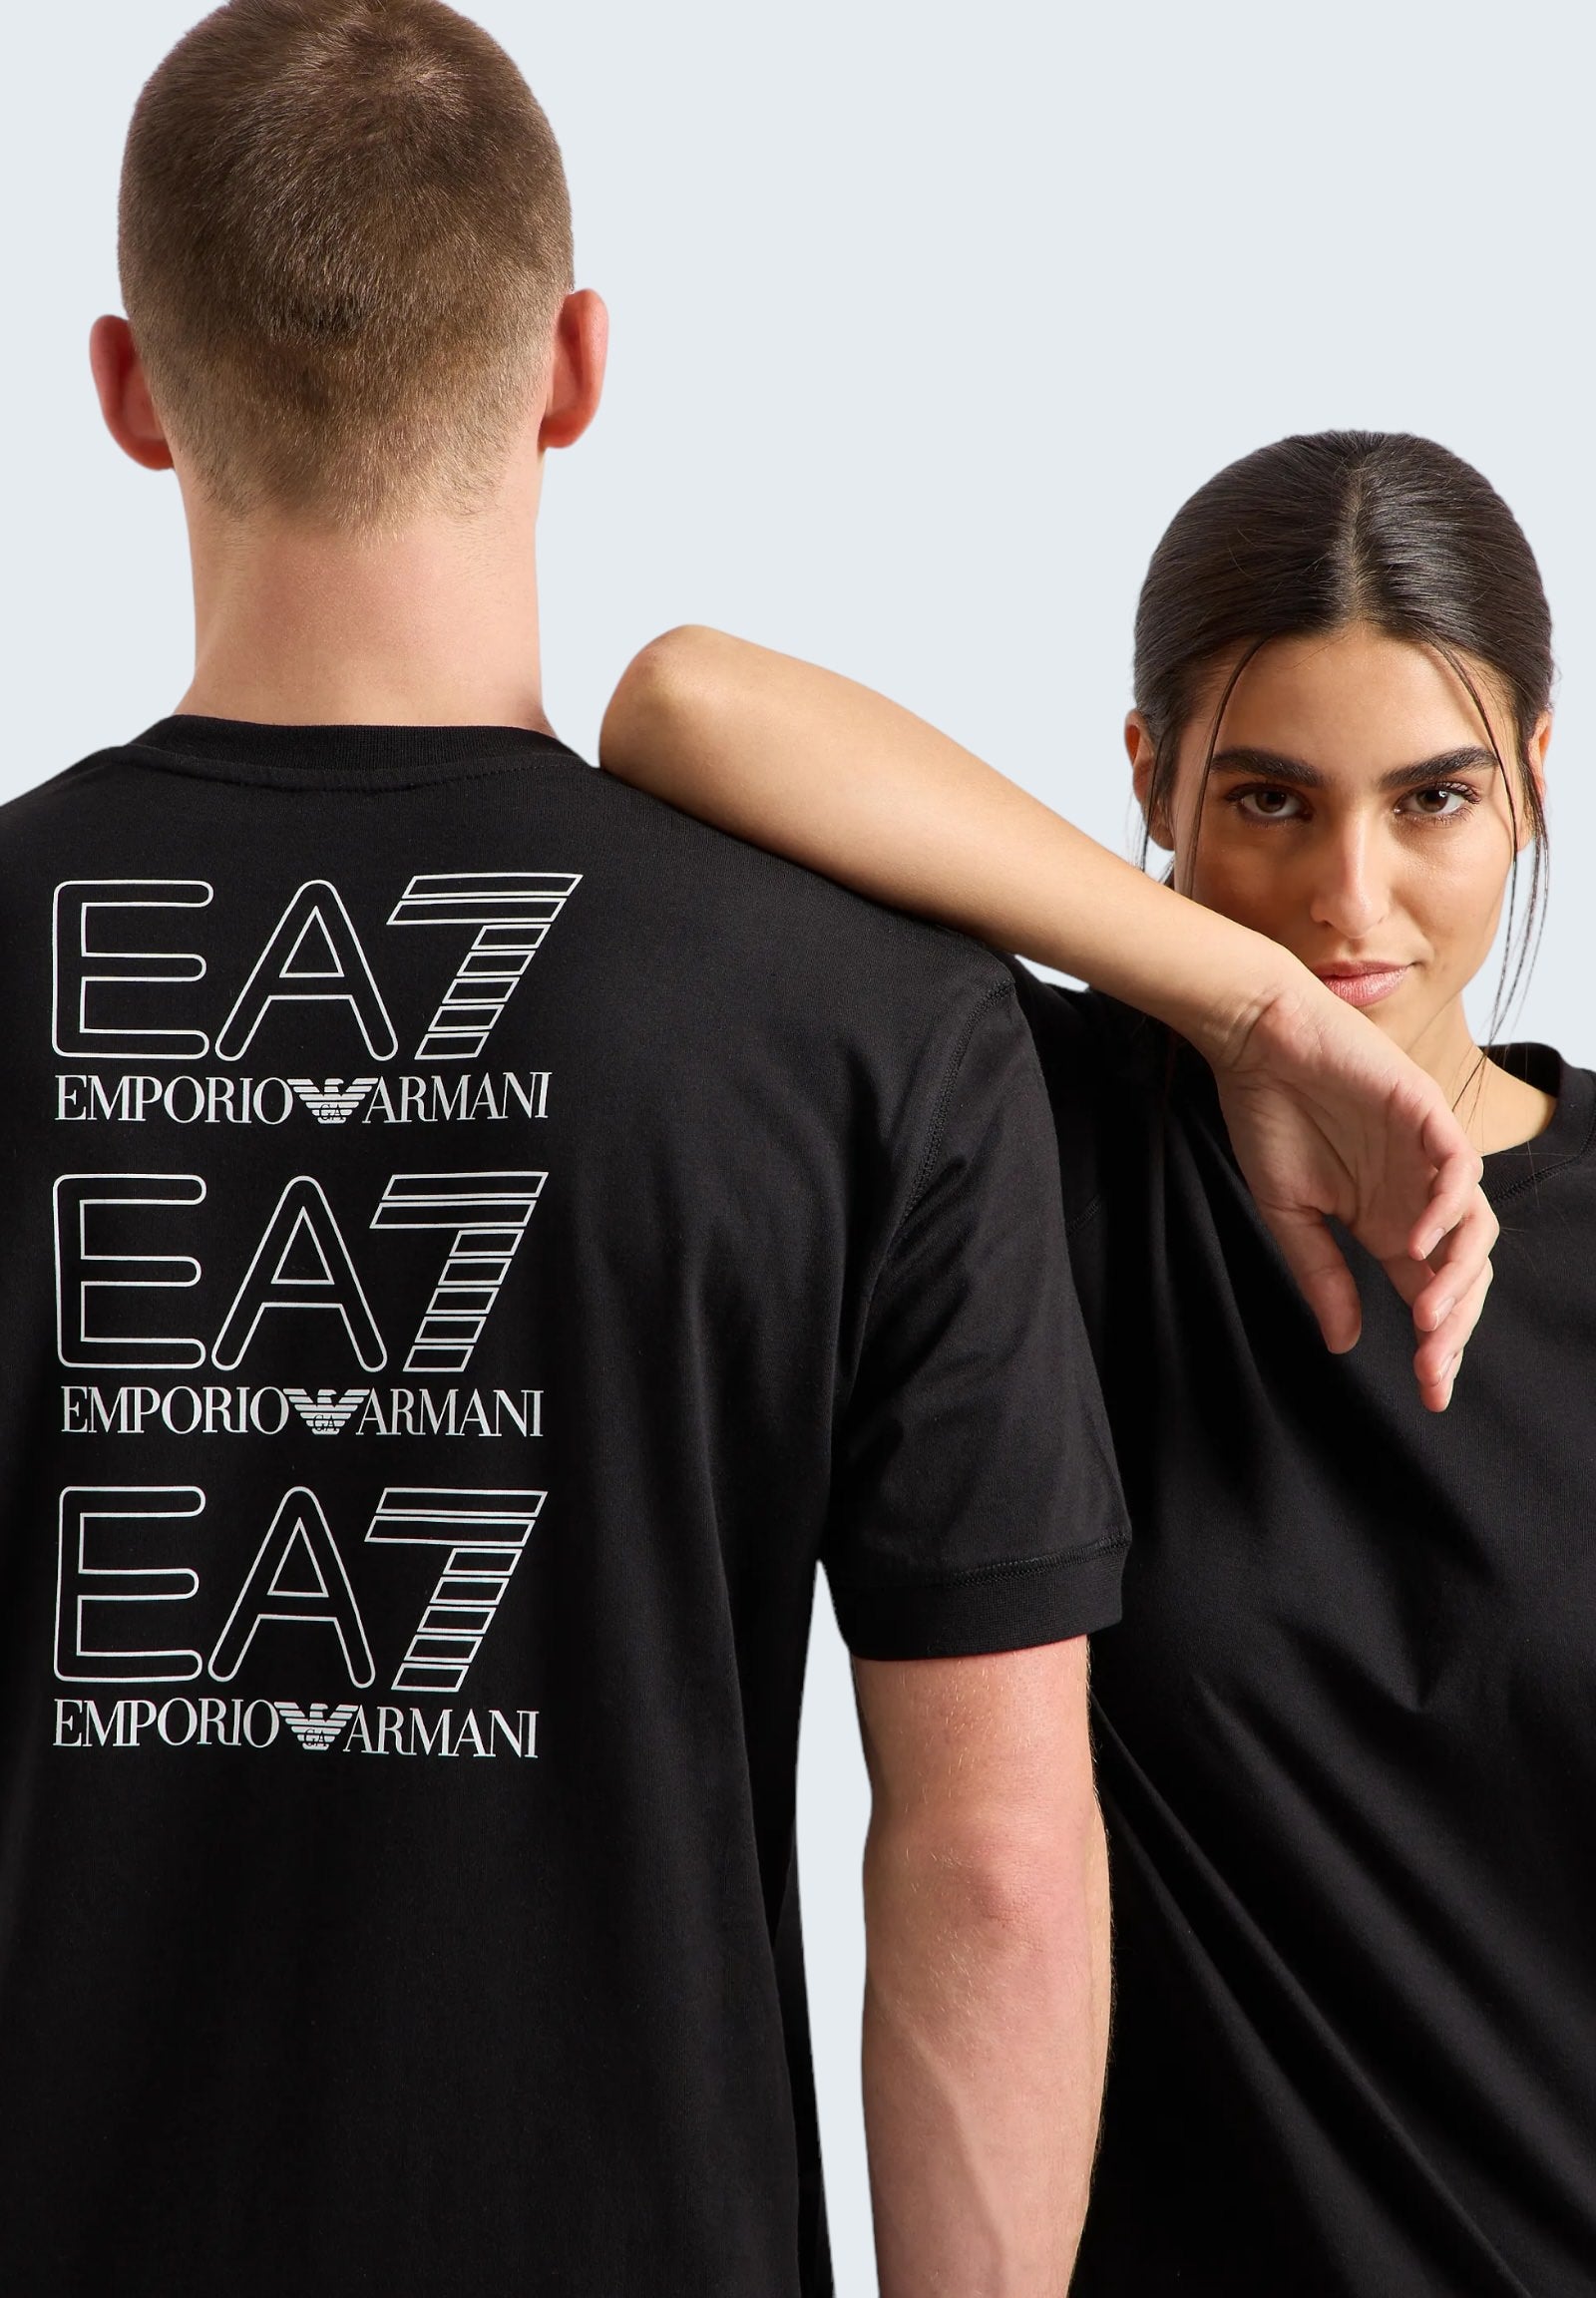 Ea7 Emporio Armani T-Shirt* 3dut02 Black